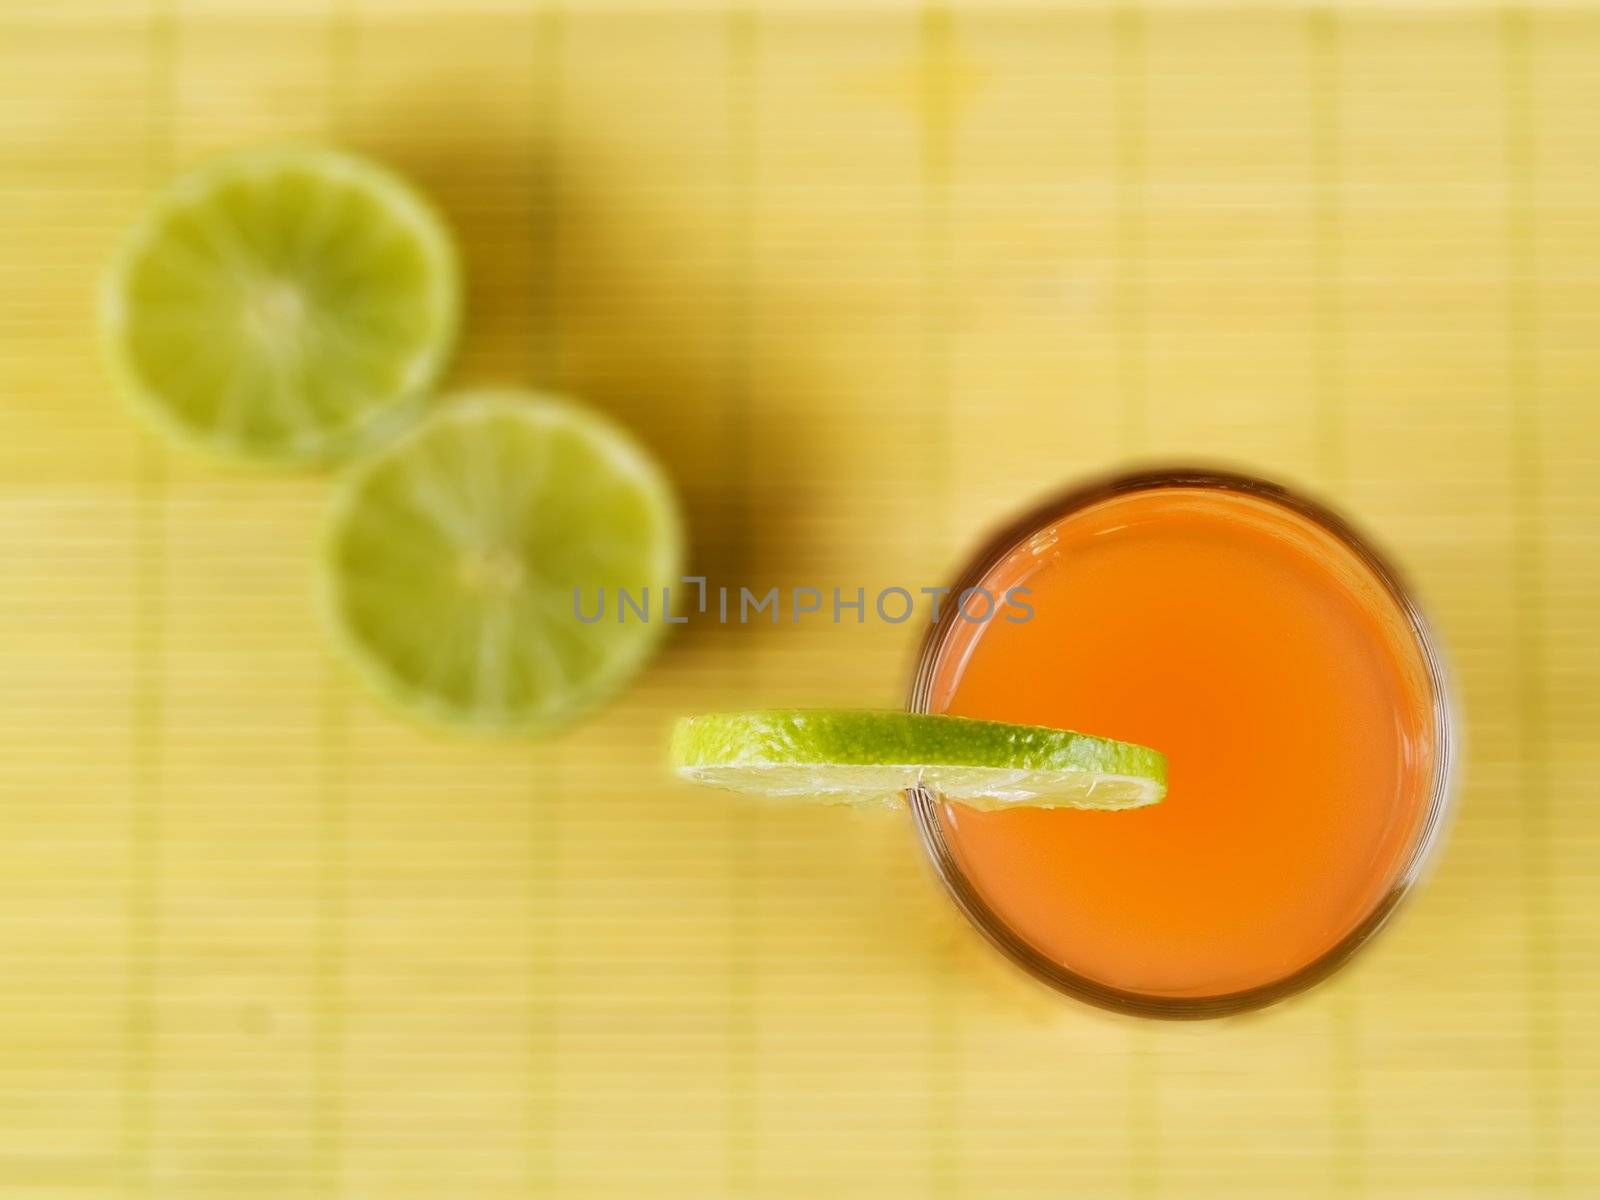 Orange juice with a lime slice